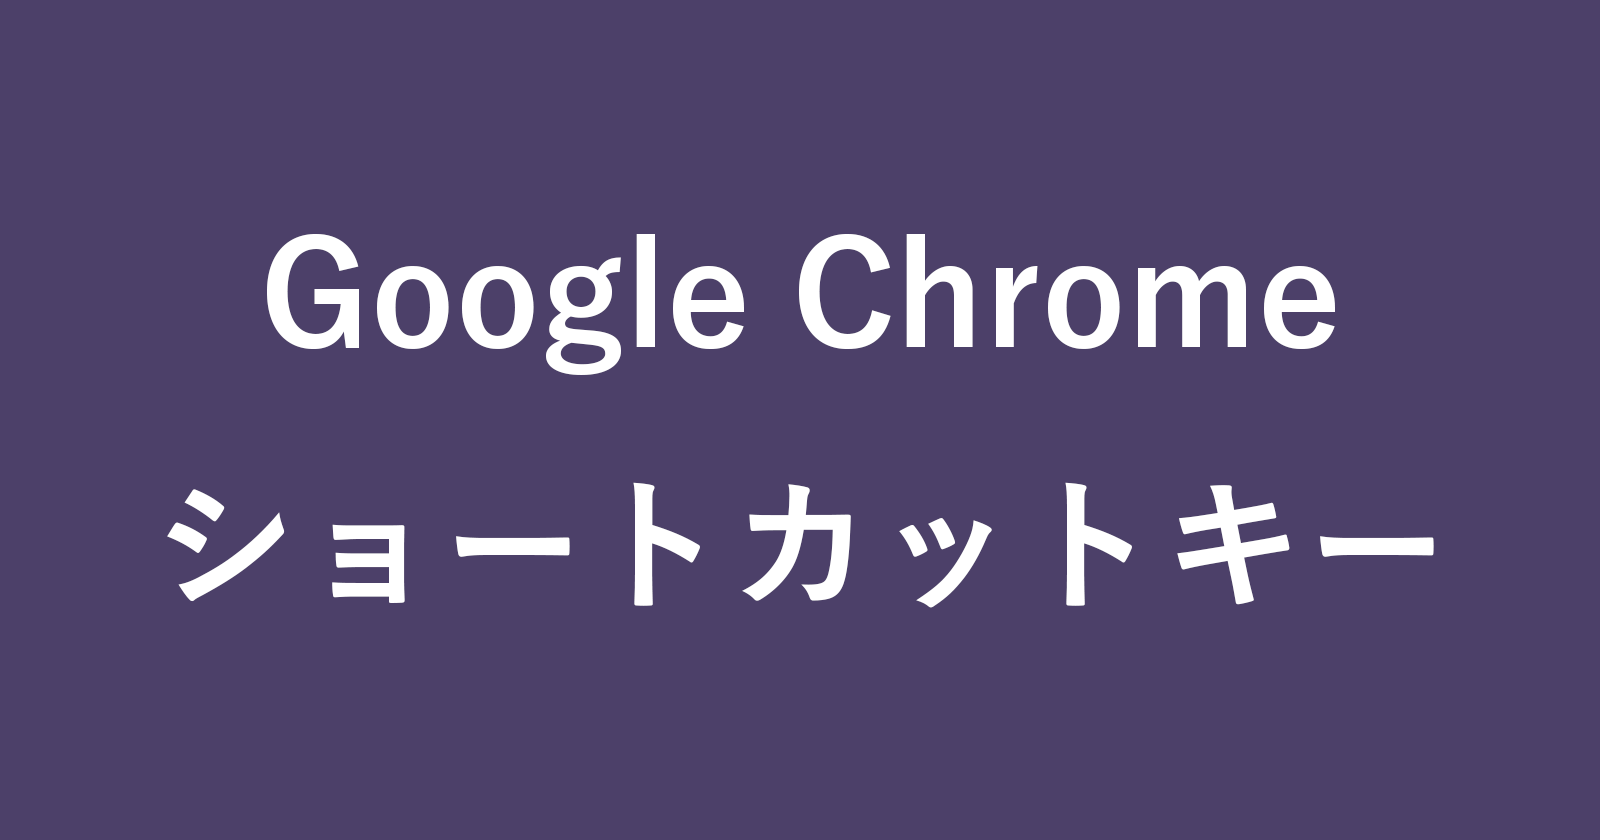 google chrome shortcut key